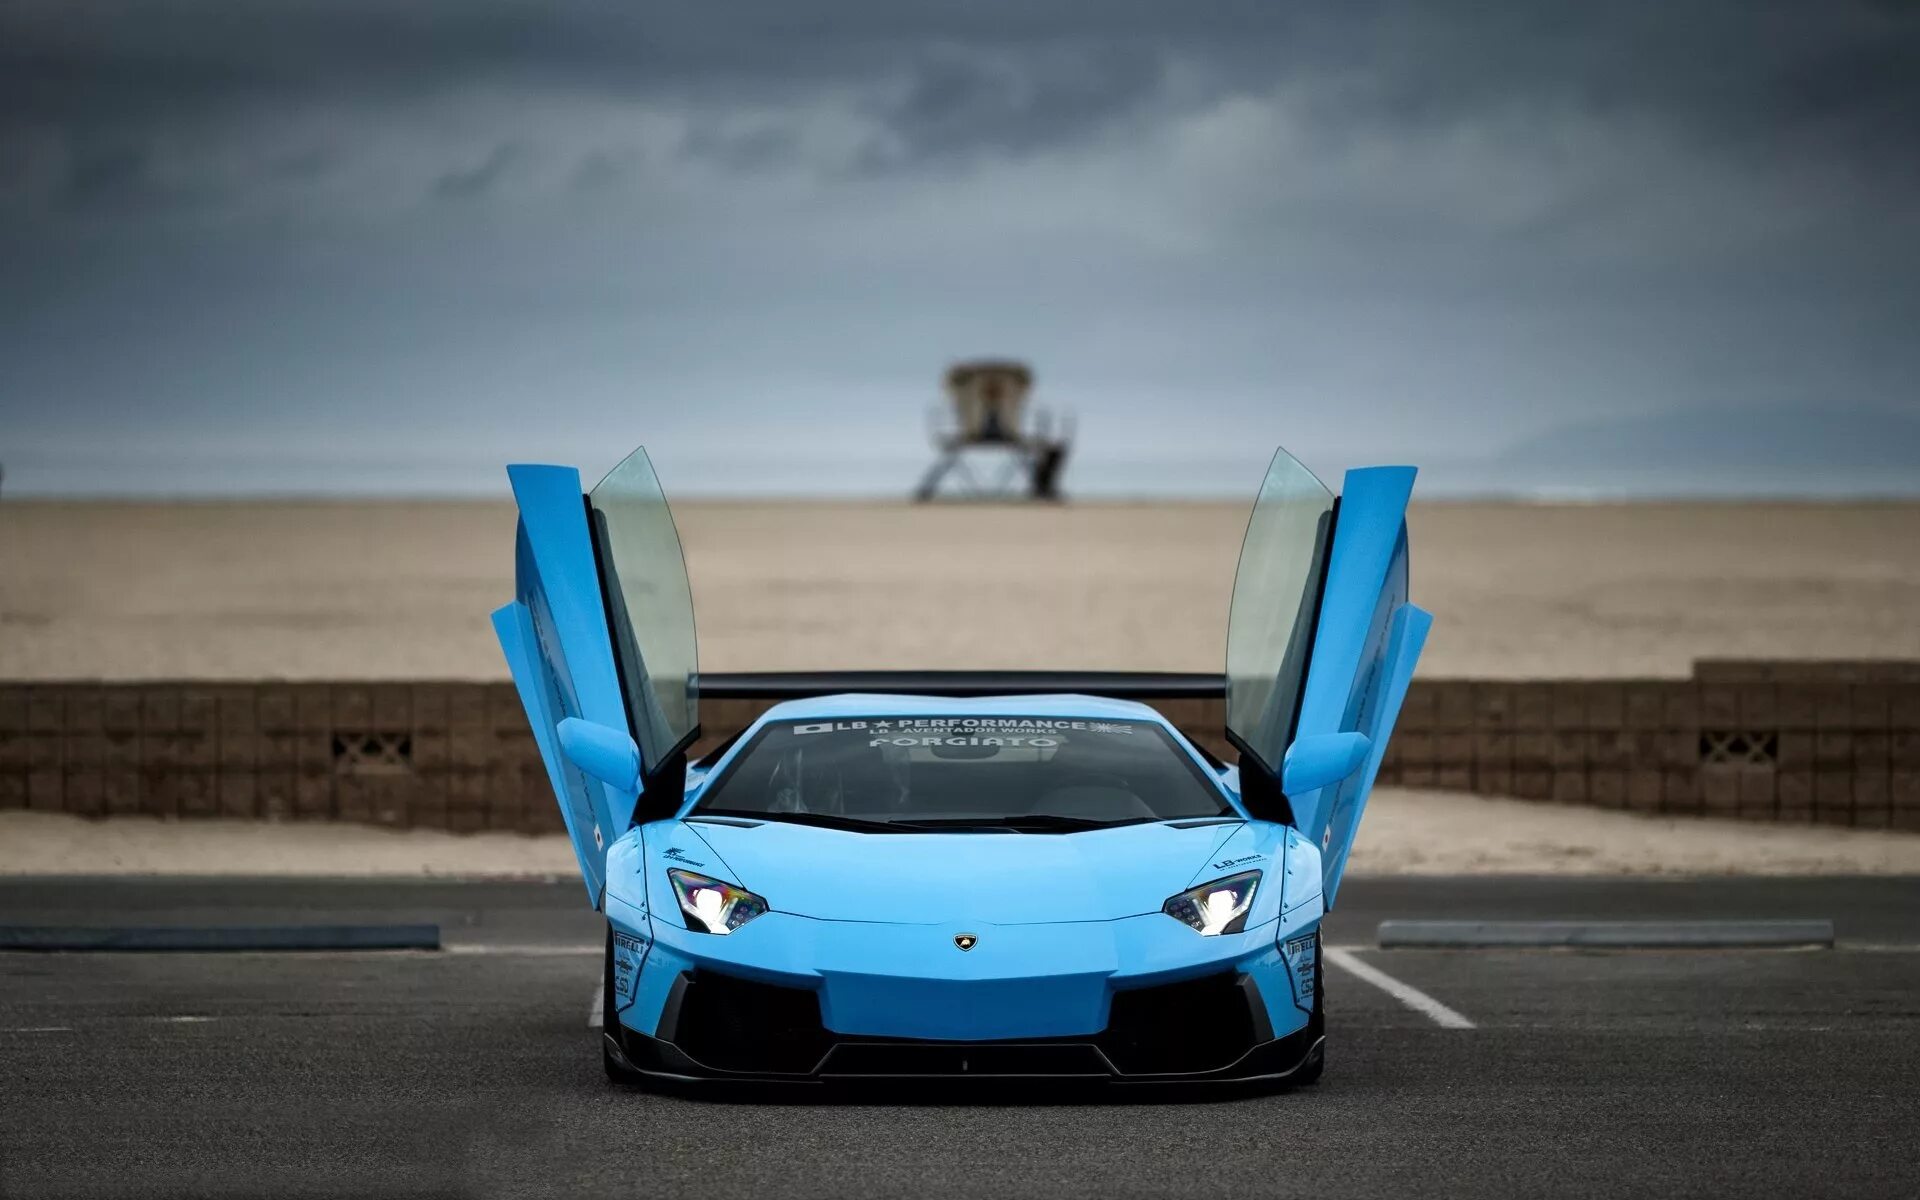 Открой картинки машин. Ламборджини авентадор Блу. Lamborghini Aventador lp700 Blue. Lamborghini Aventador lp700-4 спереди. Lamborghini Aventador lp700-4 синяя.